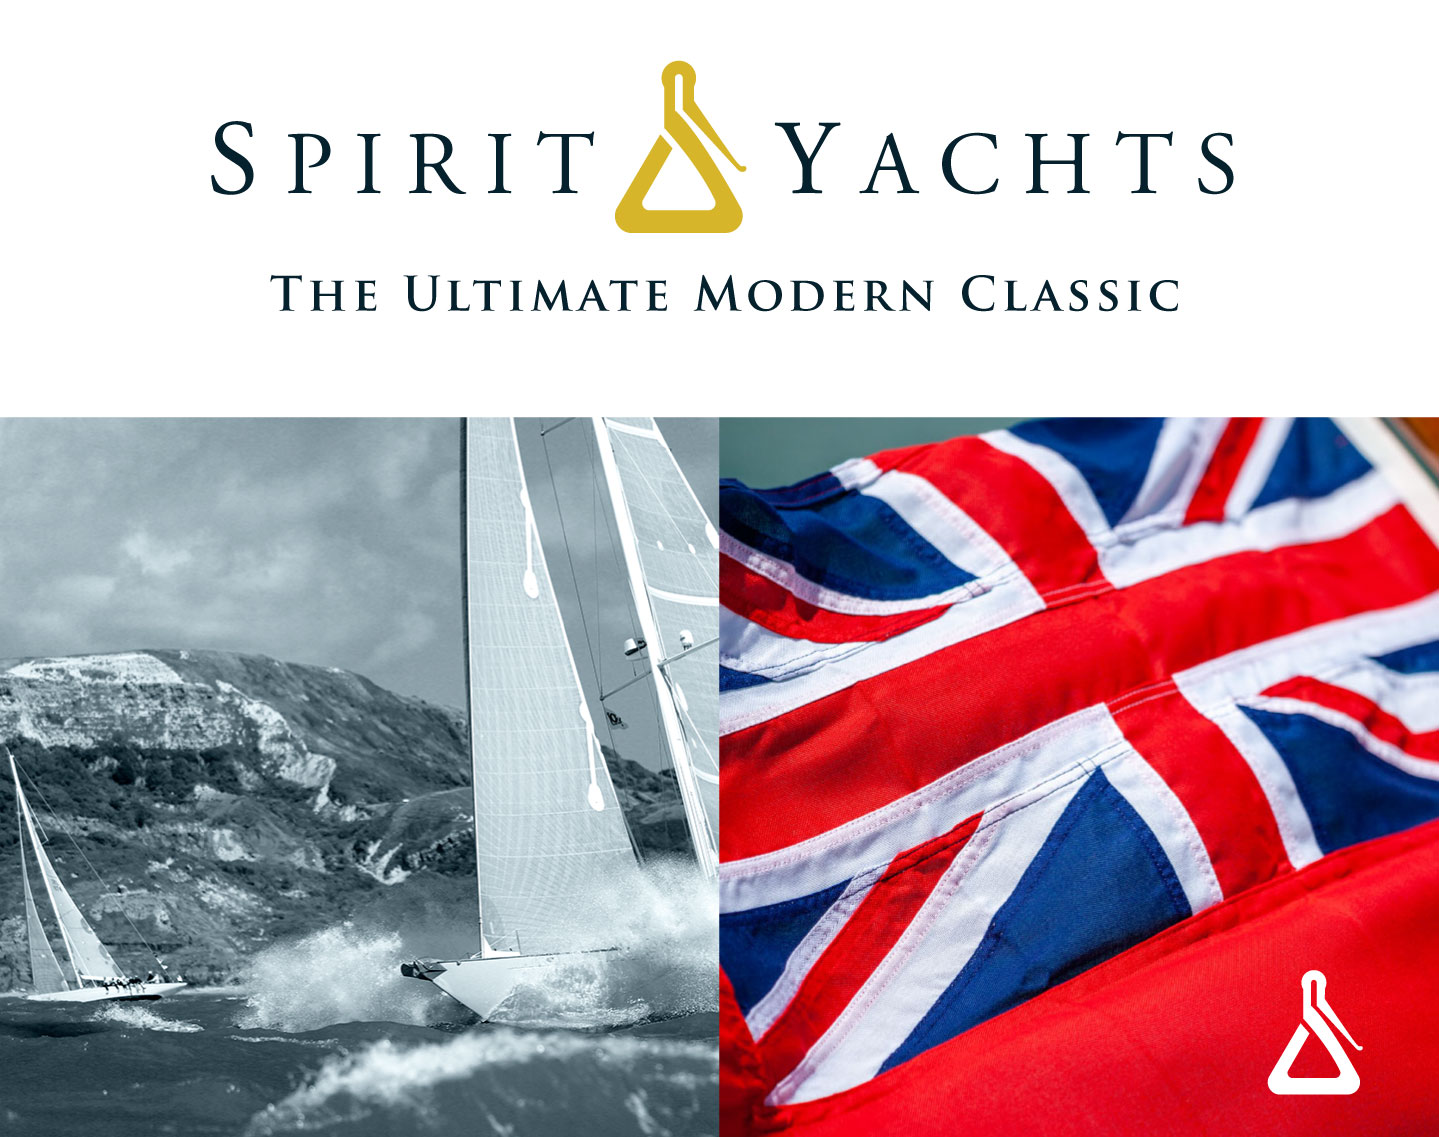 Spirit Yachts Corporate Identity